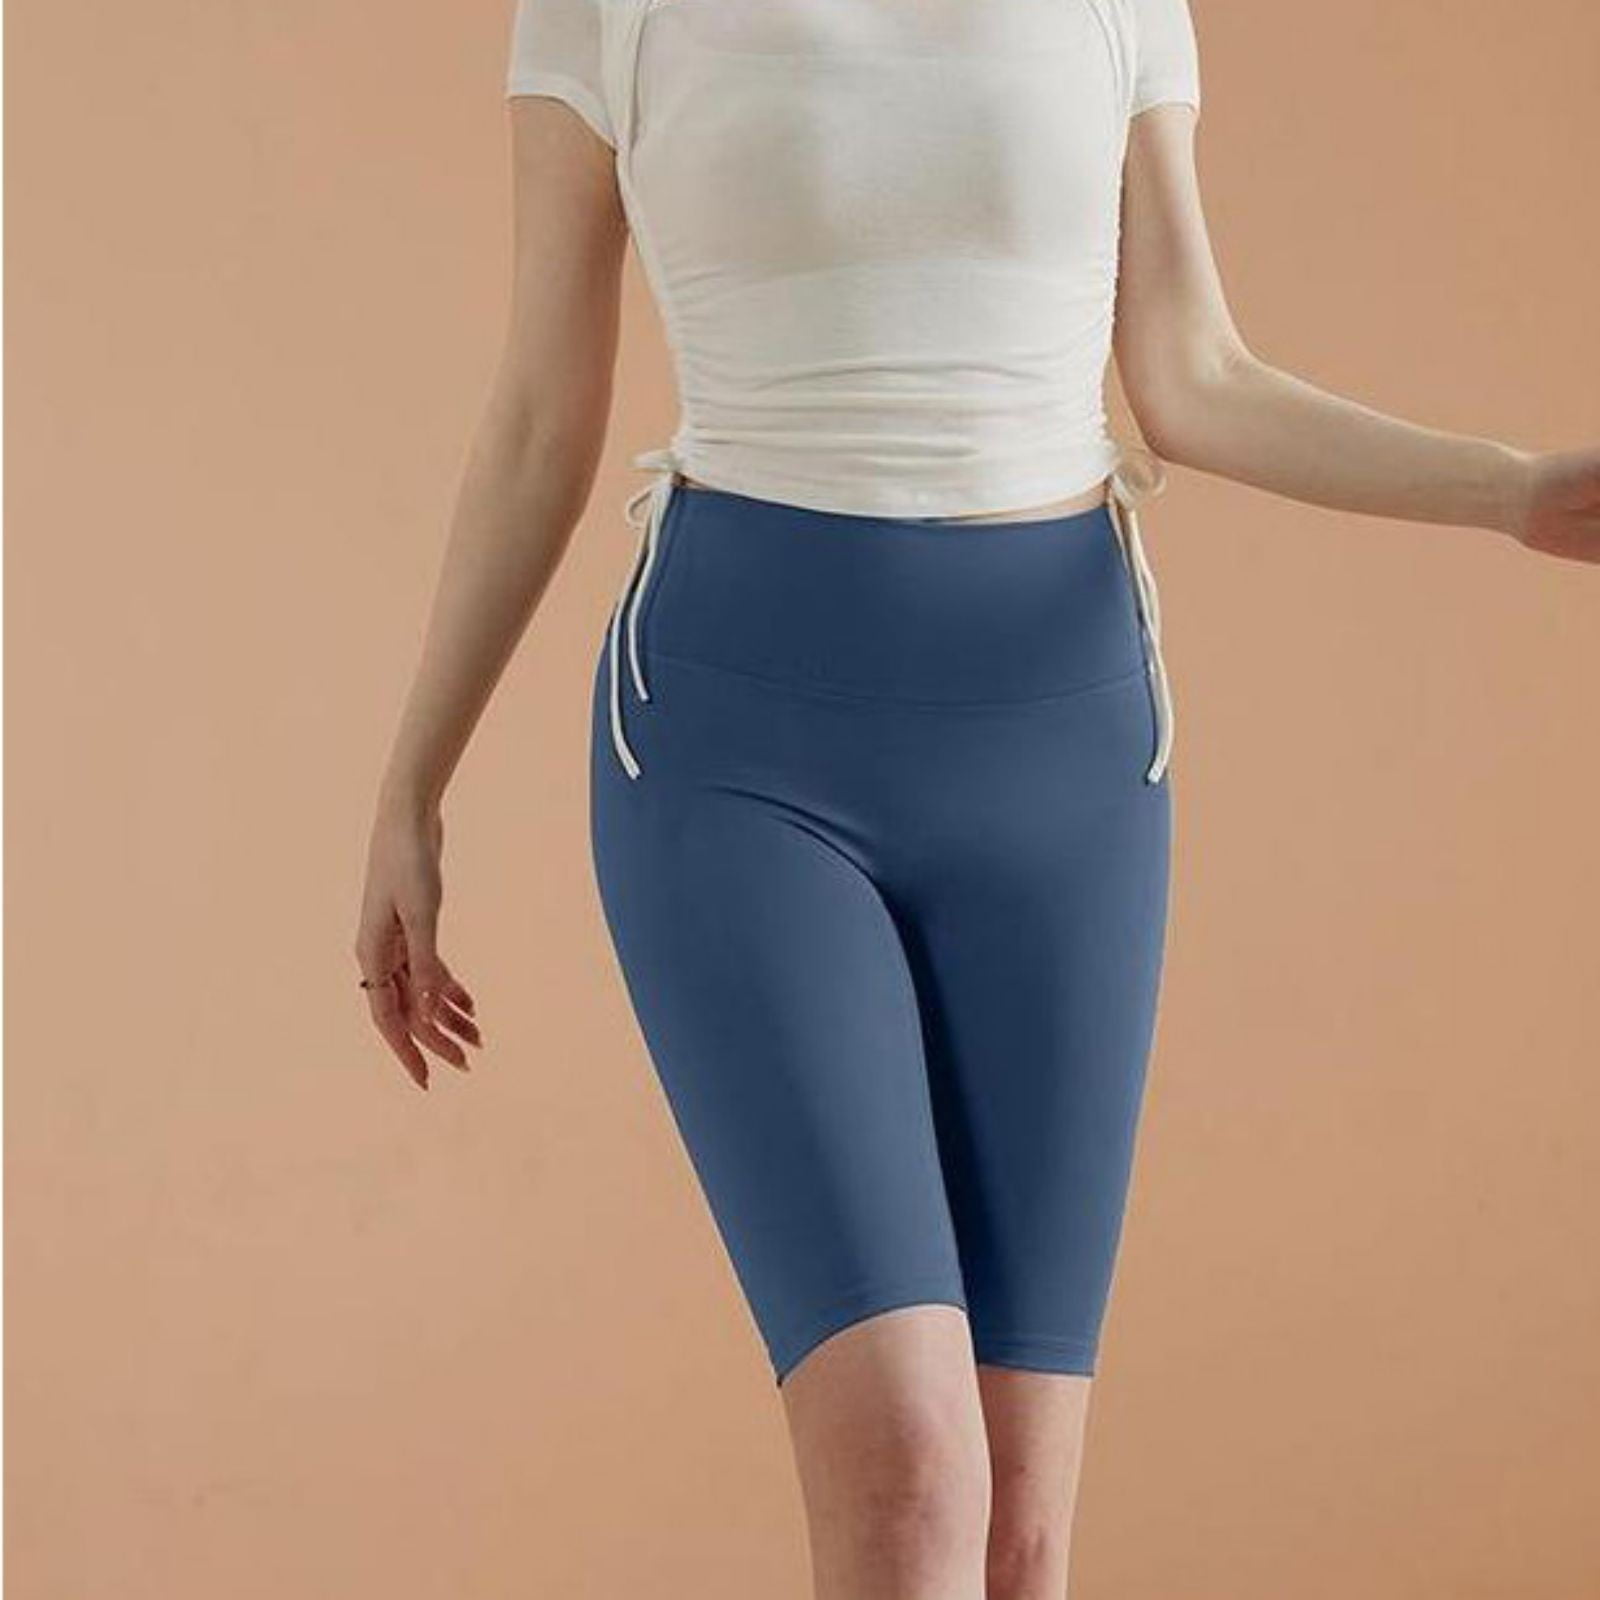 TOWED22 Yoga Pants Women,Women's Yoga Short Tummy Control Workout Running  Athletic Non See-Through Yoga Shorts with Hidden Pocket,Blue - Walmart.com